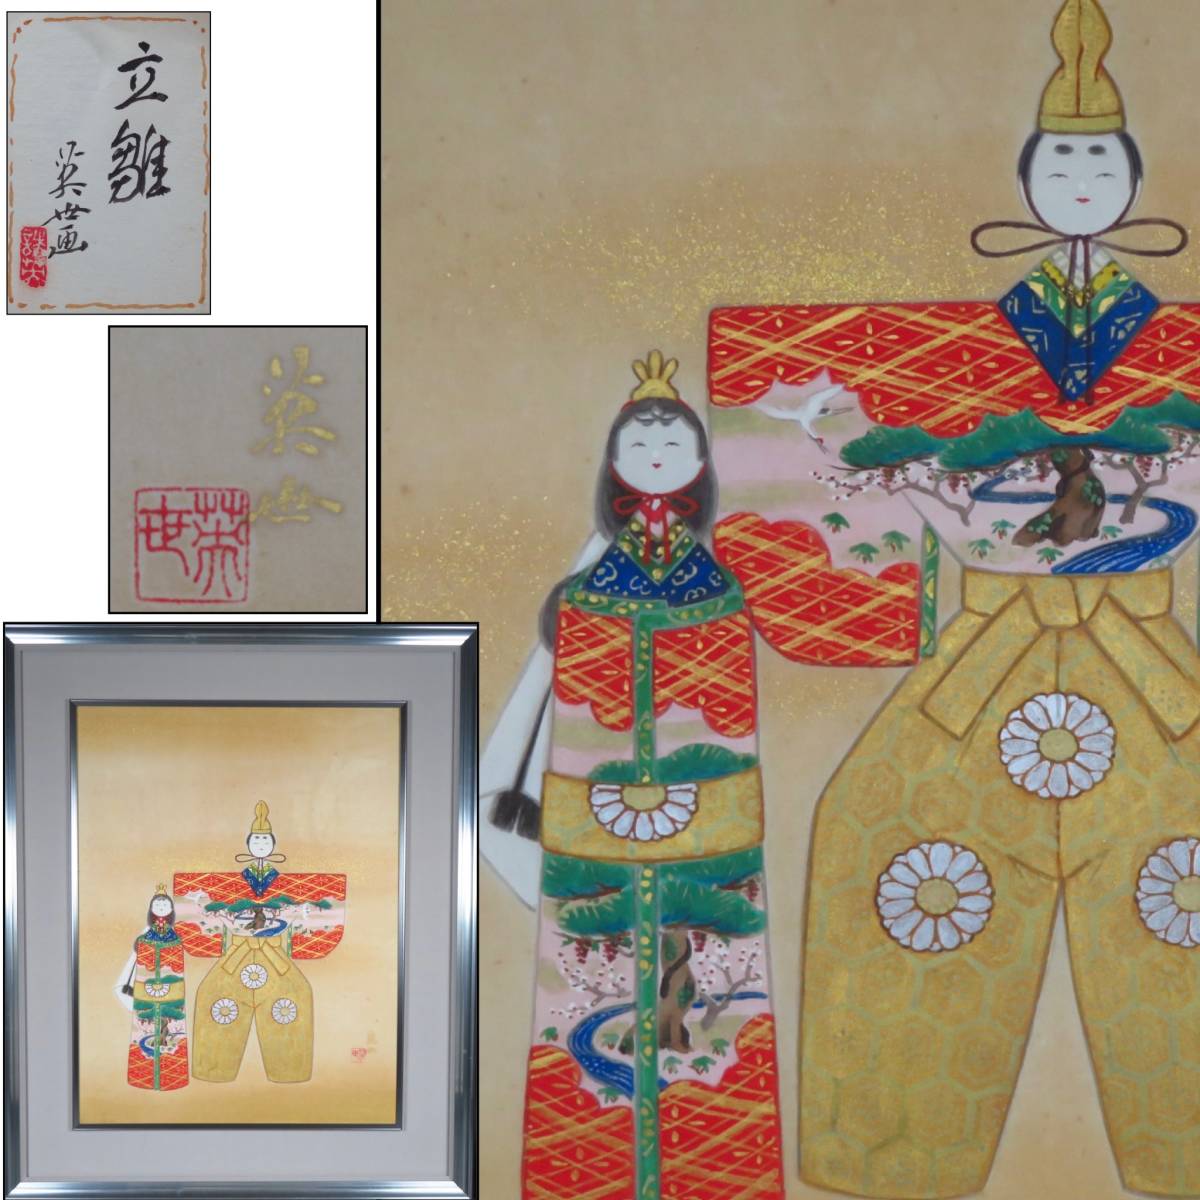 [SAKURAYA] 진품 보장 작품 [다치비나/총리상 수상 작가 모로후지 히데요] 그림, 일본화, 밀봉하다, 예술가가 새긴 것, 고대 미술, 높이 71cm x 폭 59cm, 삽화, 그림, 초상화